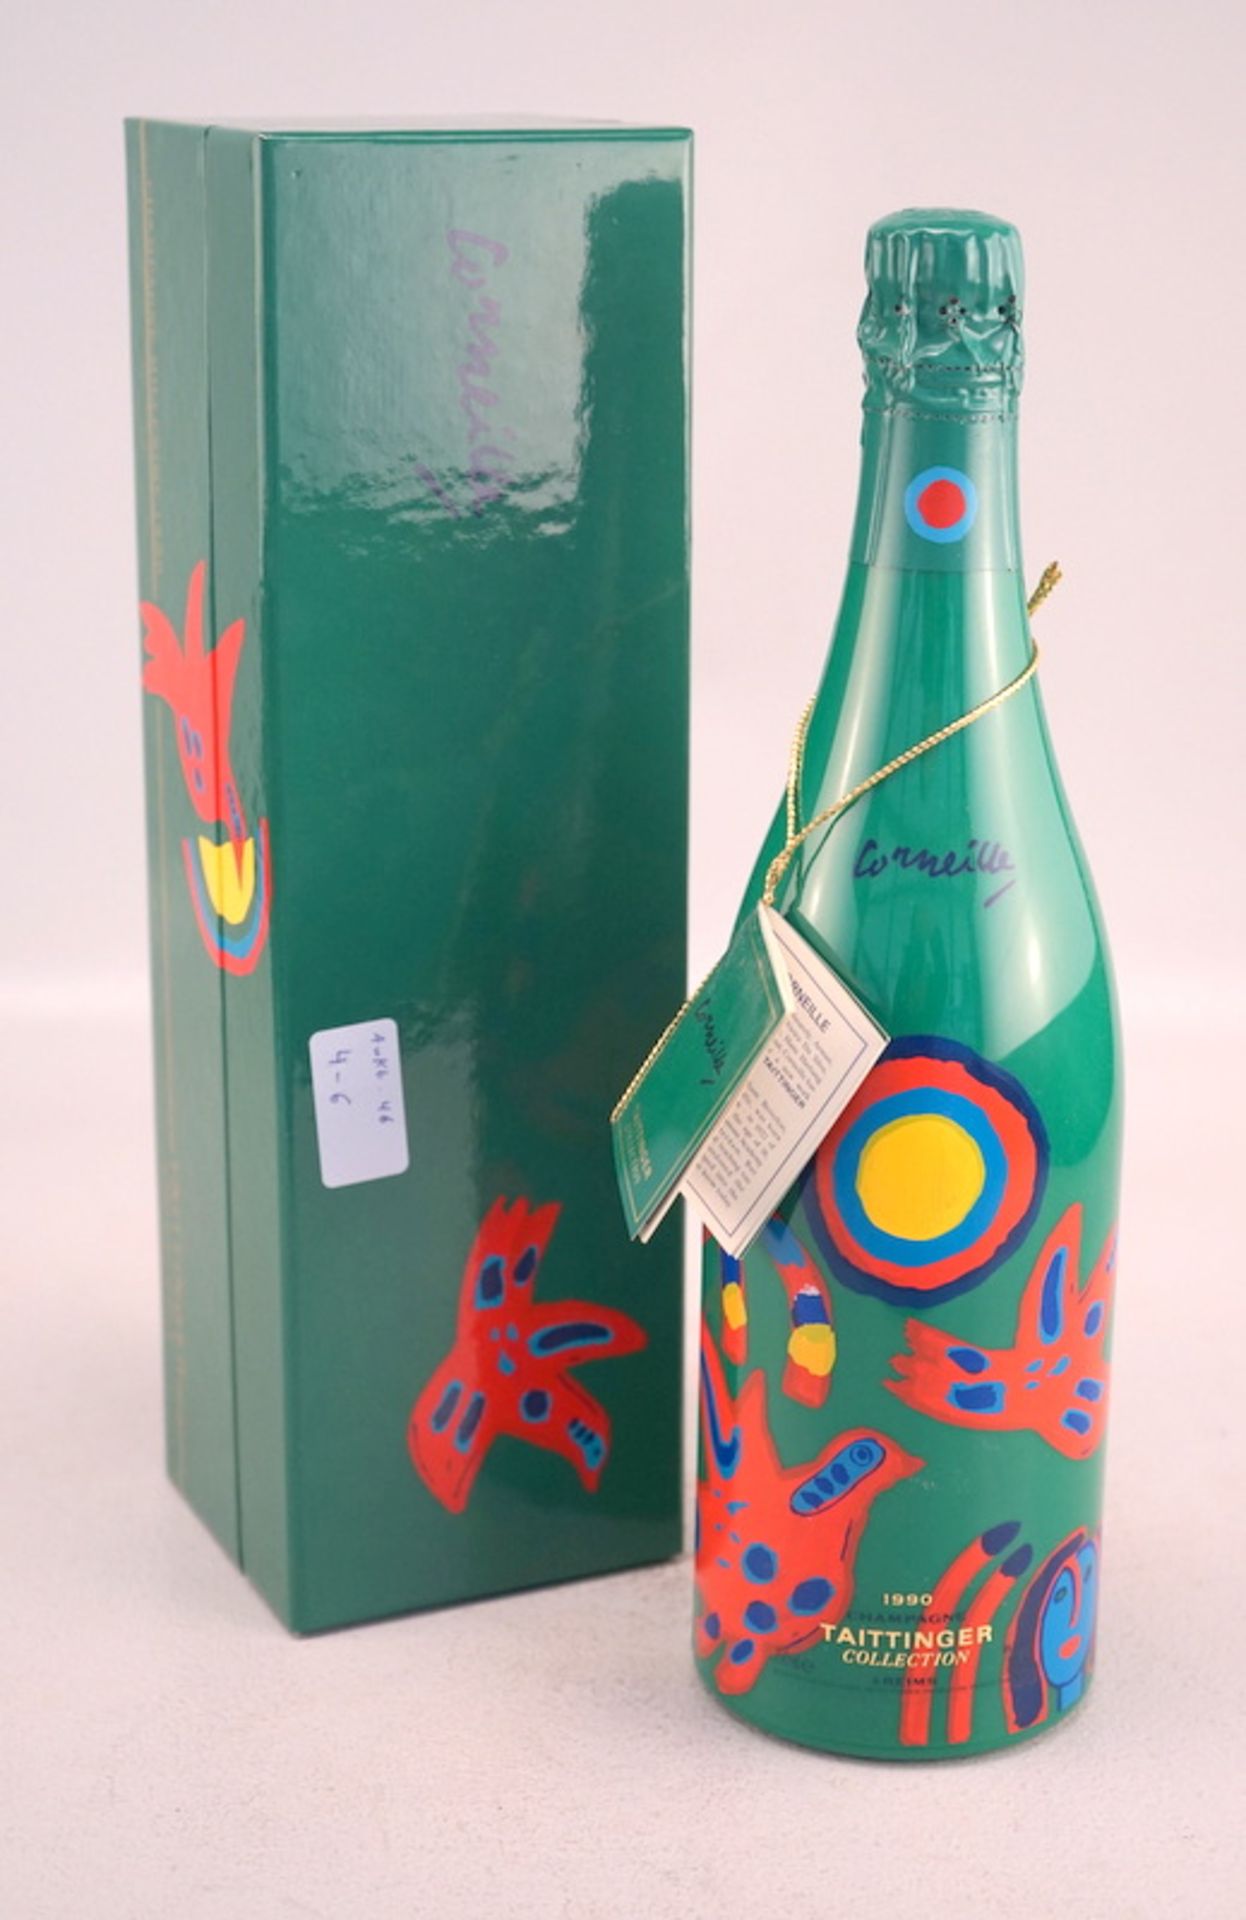 1990 Taittinger Collection Corneille, Champagne Brut